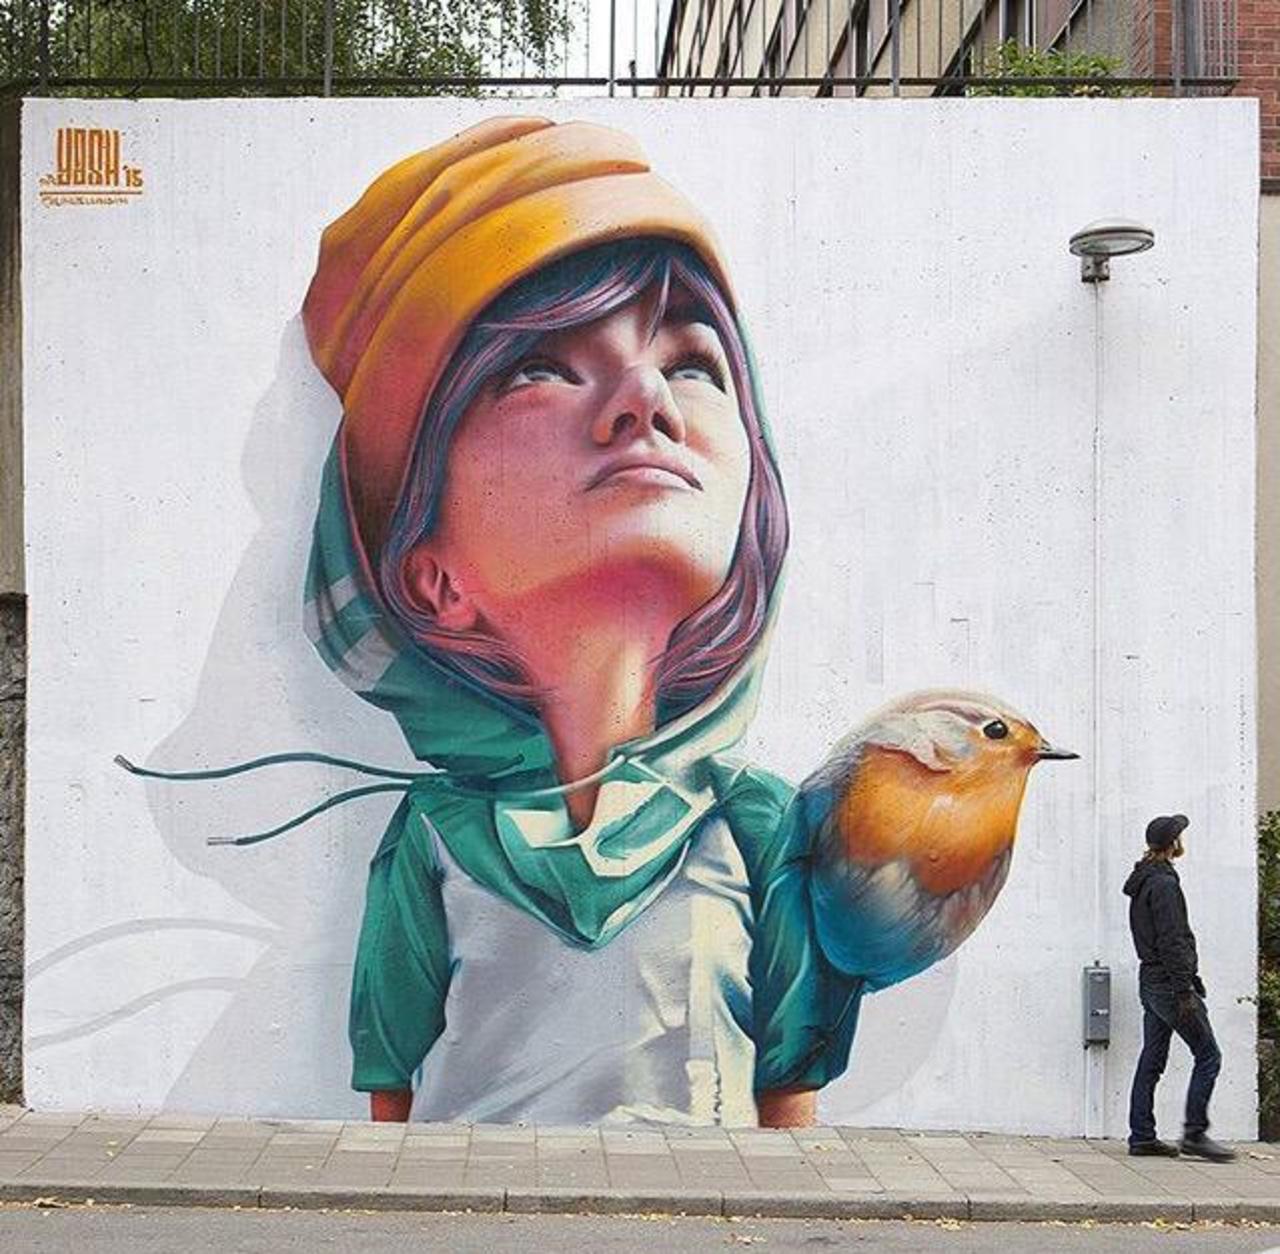 New Street Art by Yash 

#art #graffiti #mural #streetart http://t.co/JG3w99nUAw